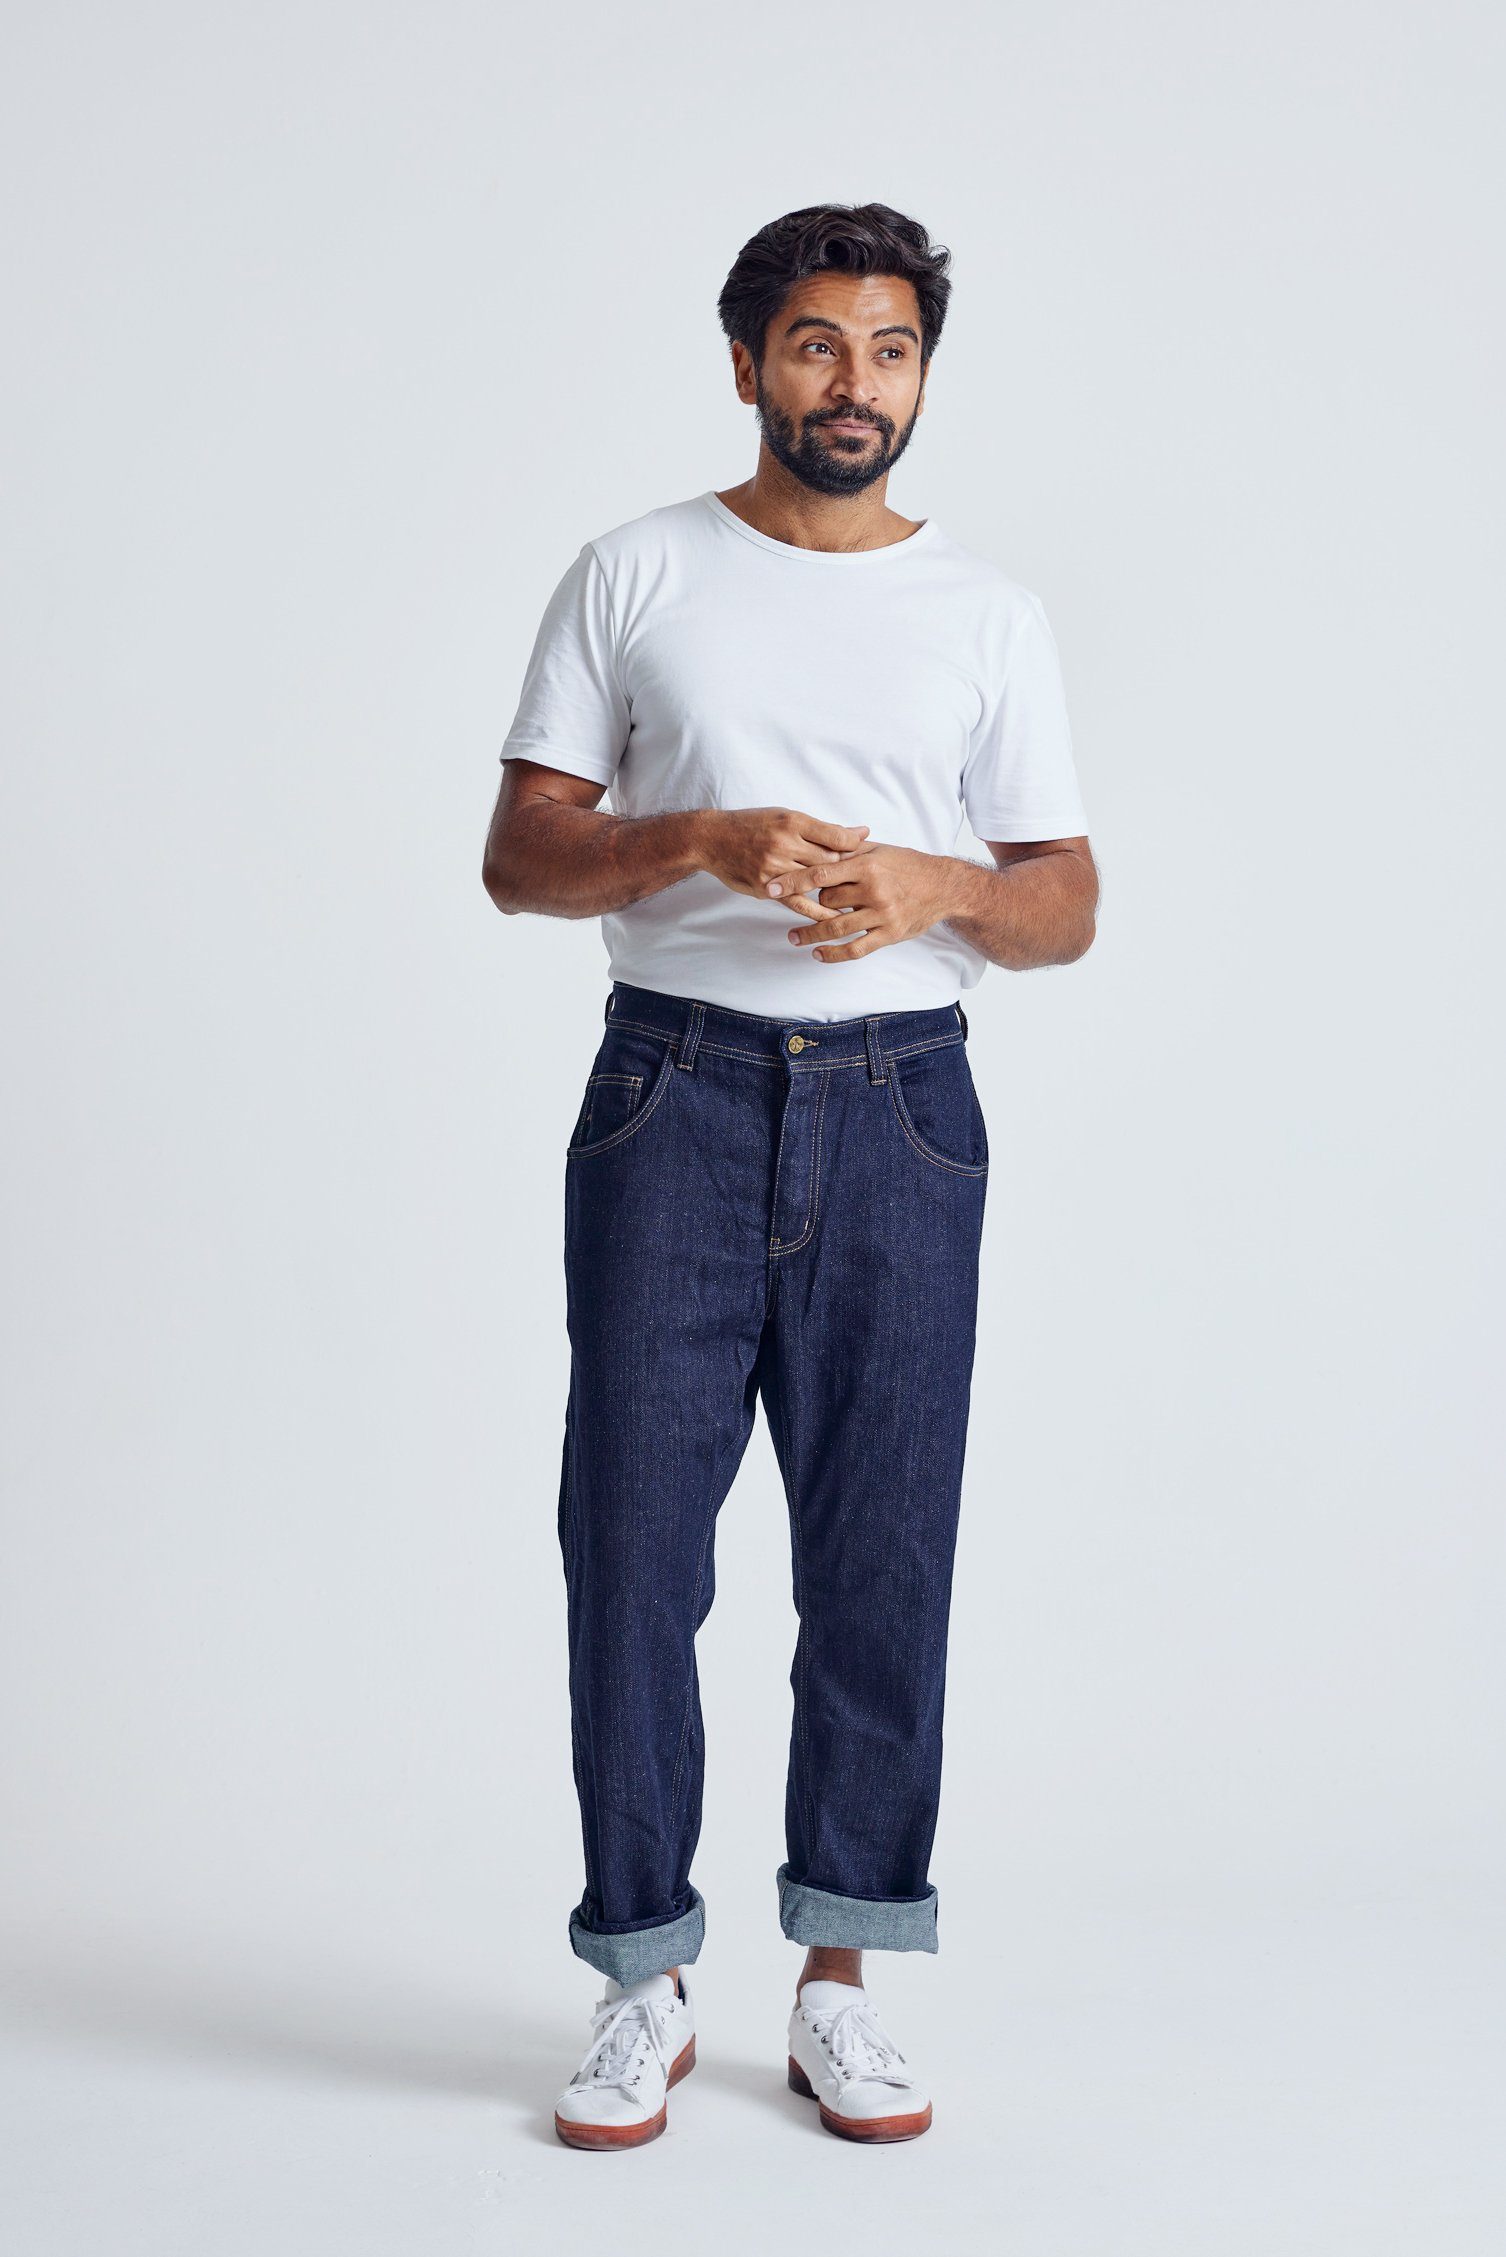 SATCH Rinse - GOTS Organic Cotton Jeans by Flax & Loom, 34 / Regular